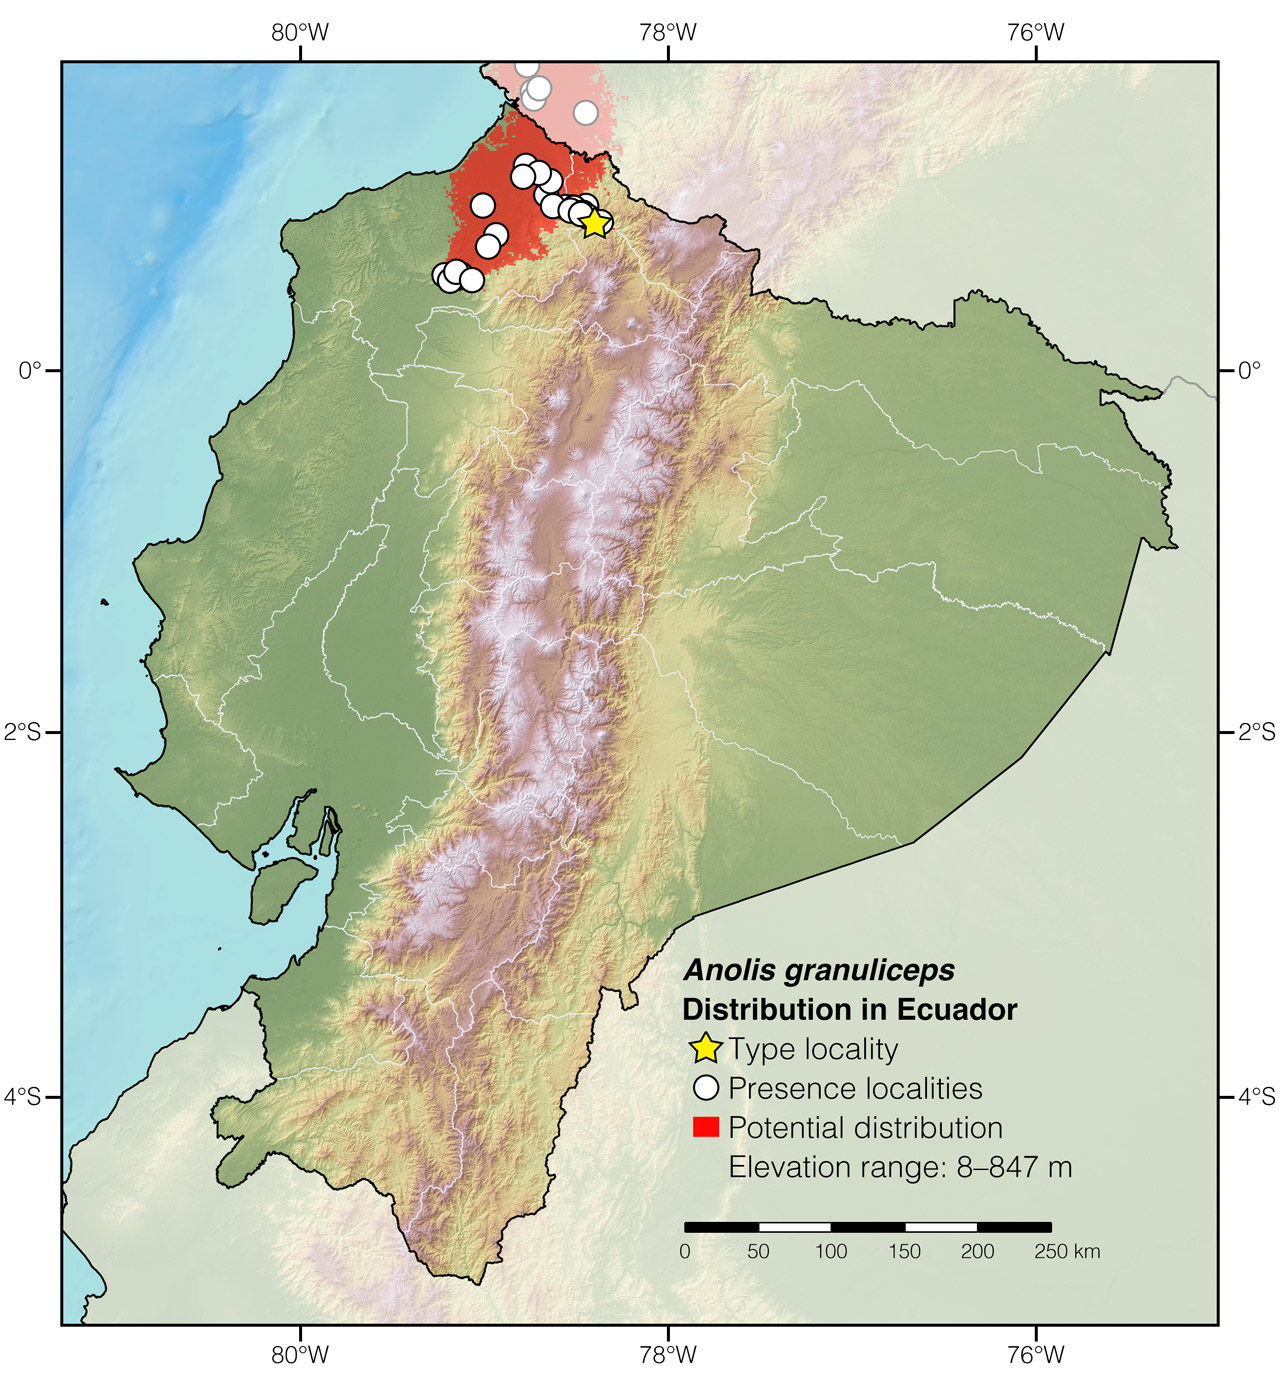 Distribution of Anolis granuliceps in Ecuador